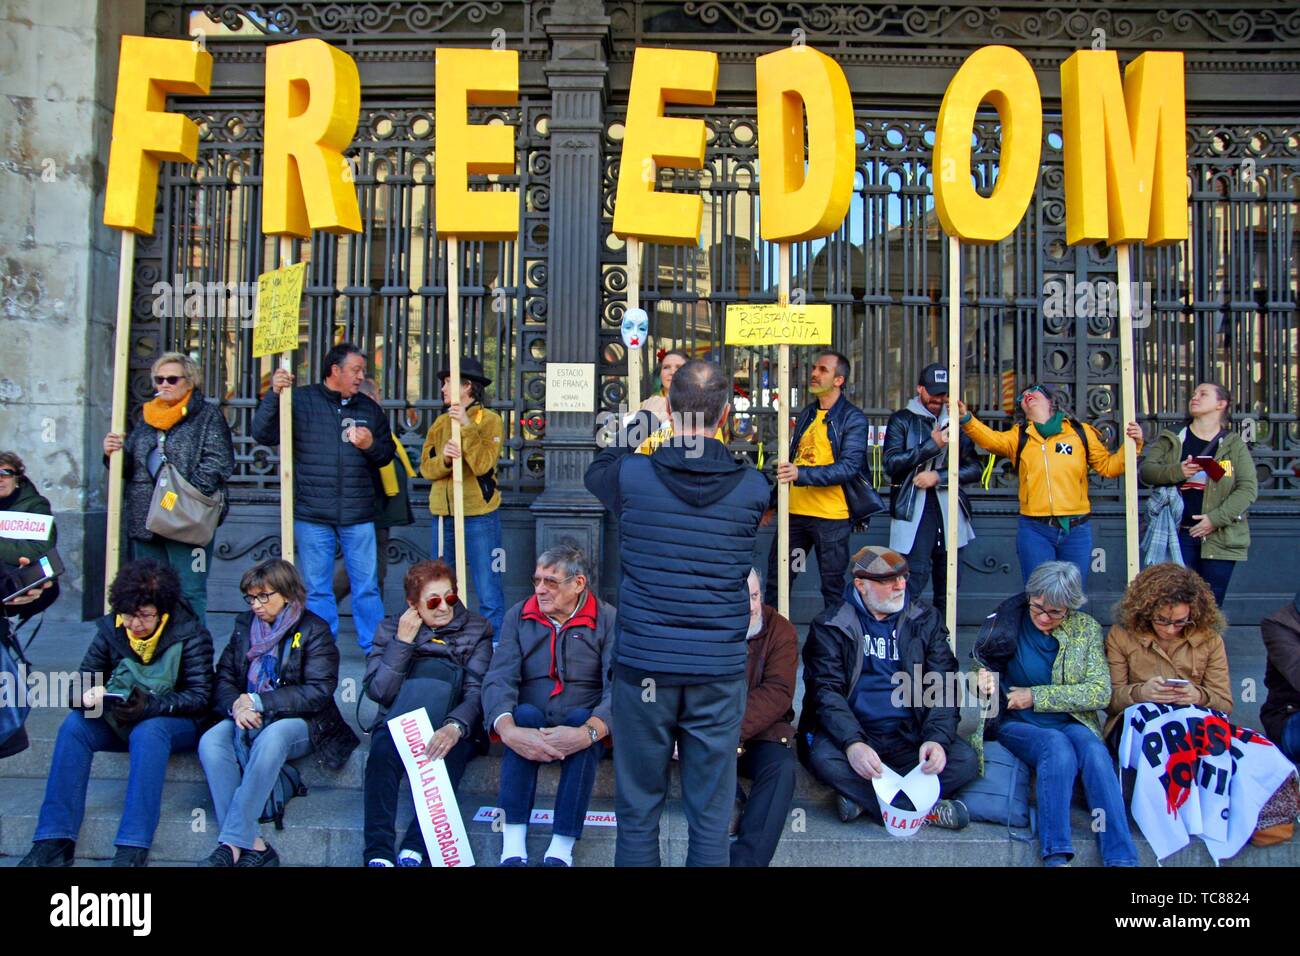 freedom, Catalan independence movement, Barcelona, Catalonia, Spain Stock Photo